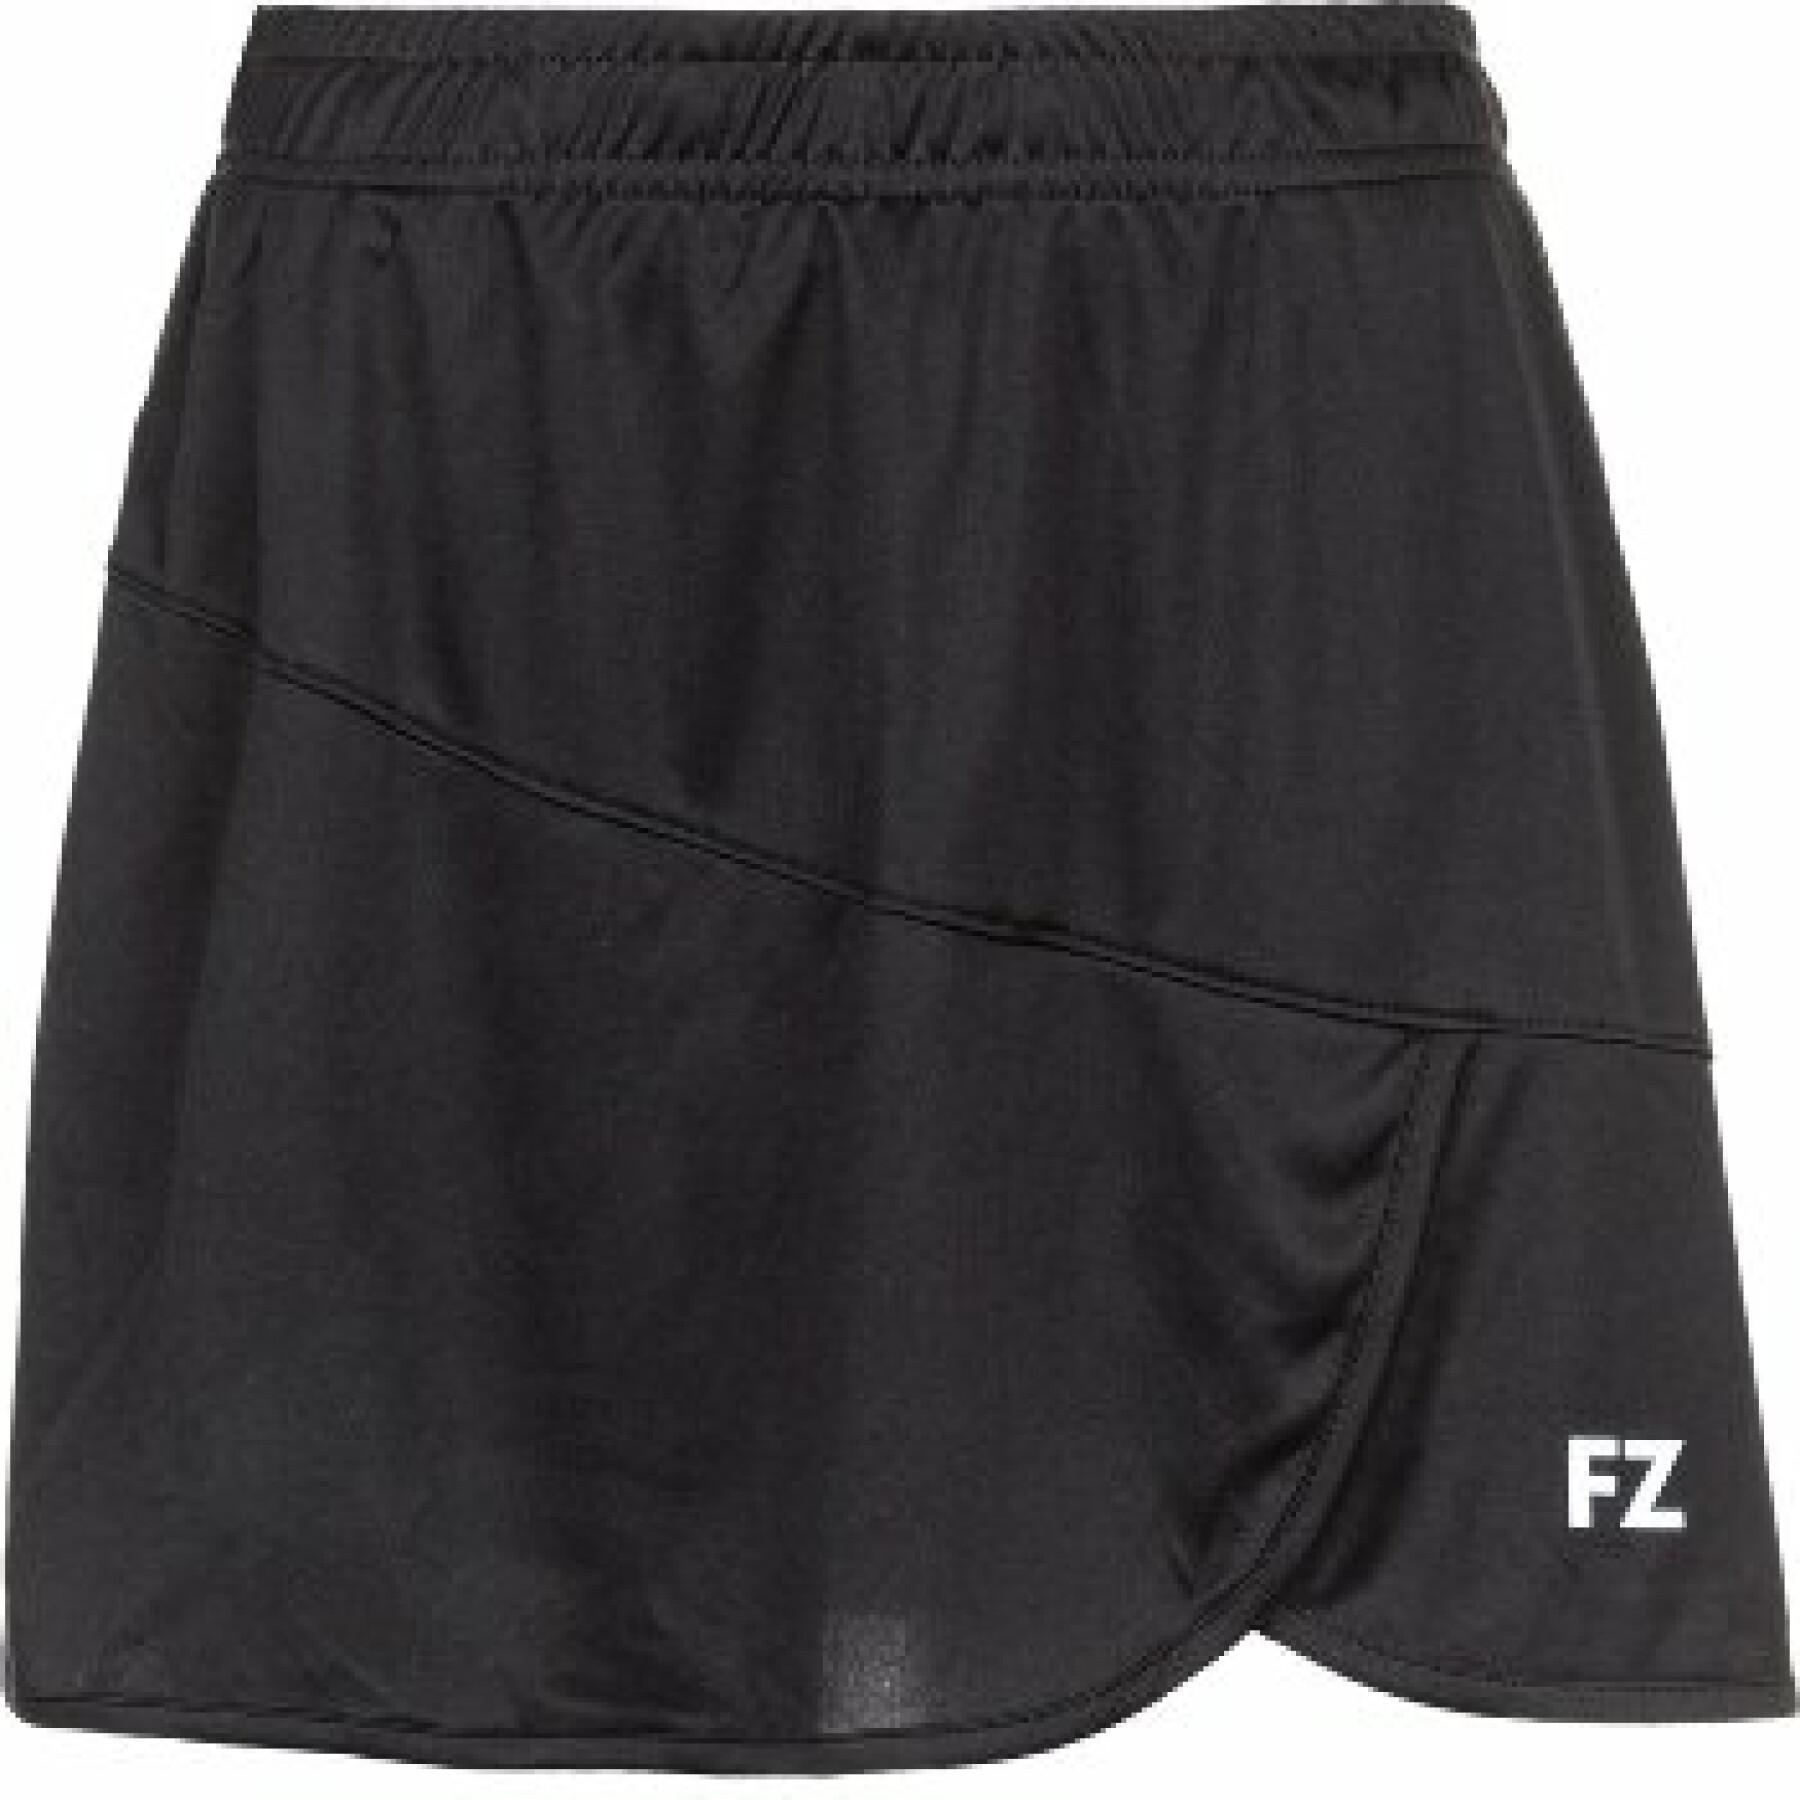 Women's skirt-short Victor Forza Liddi 2 in 1